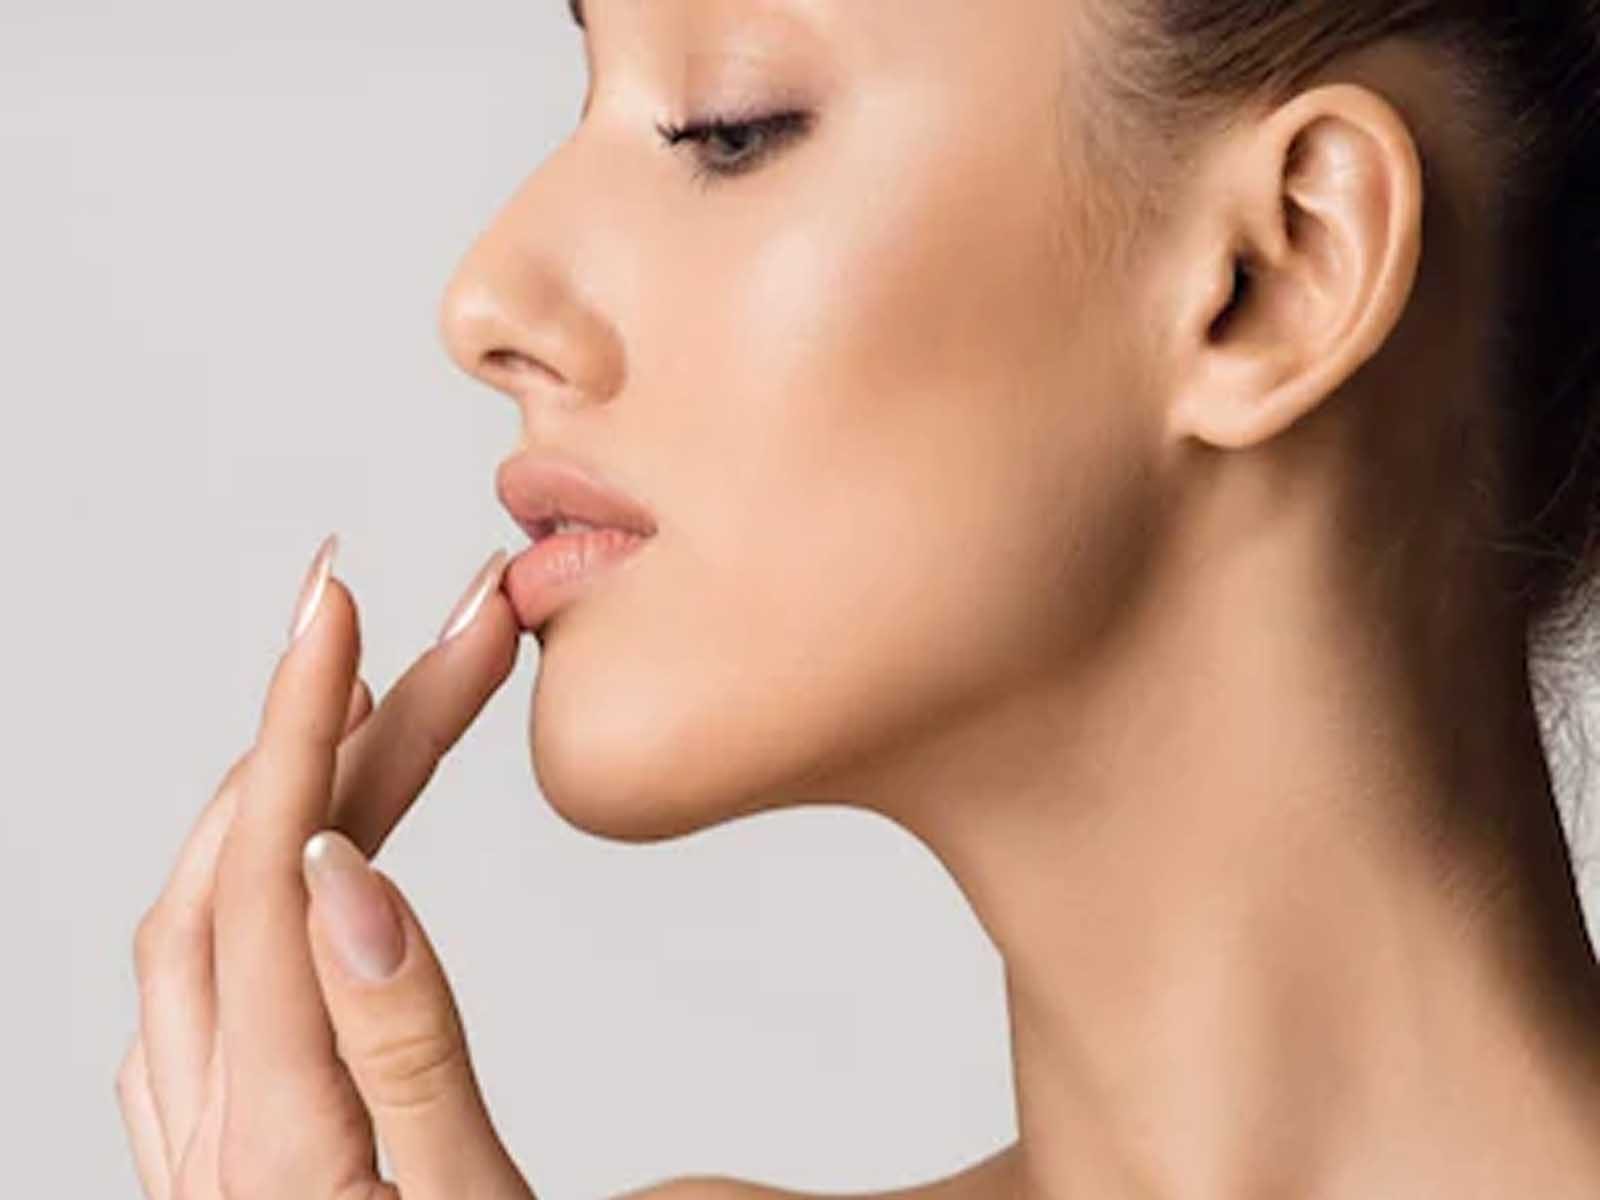 Remedies for Swollen Lips: ਬੁੱਲ੍ਹਾਂ ਦੀ ਸੋਜ ਨੂੰ ਦੂਰ ਕਰਨ ਲਈ ਜਾਣੋ ਘਰੇਲੂ ਇਲਾਜ